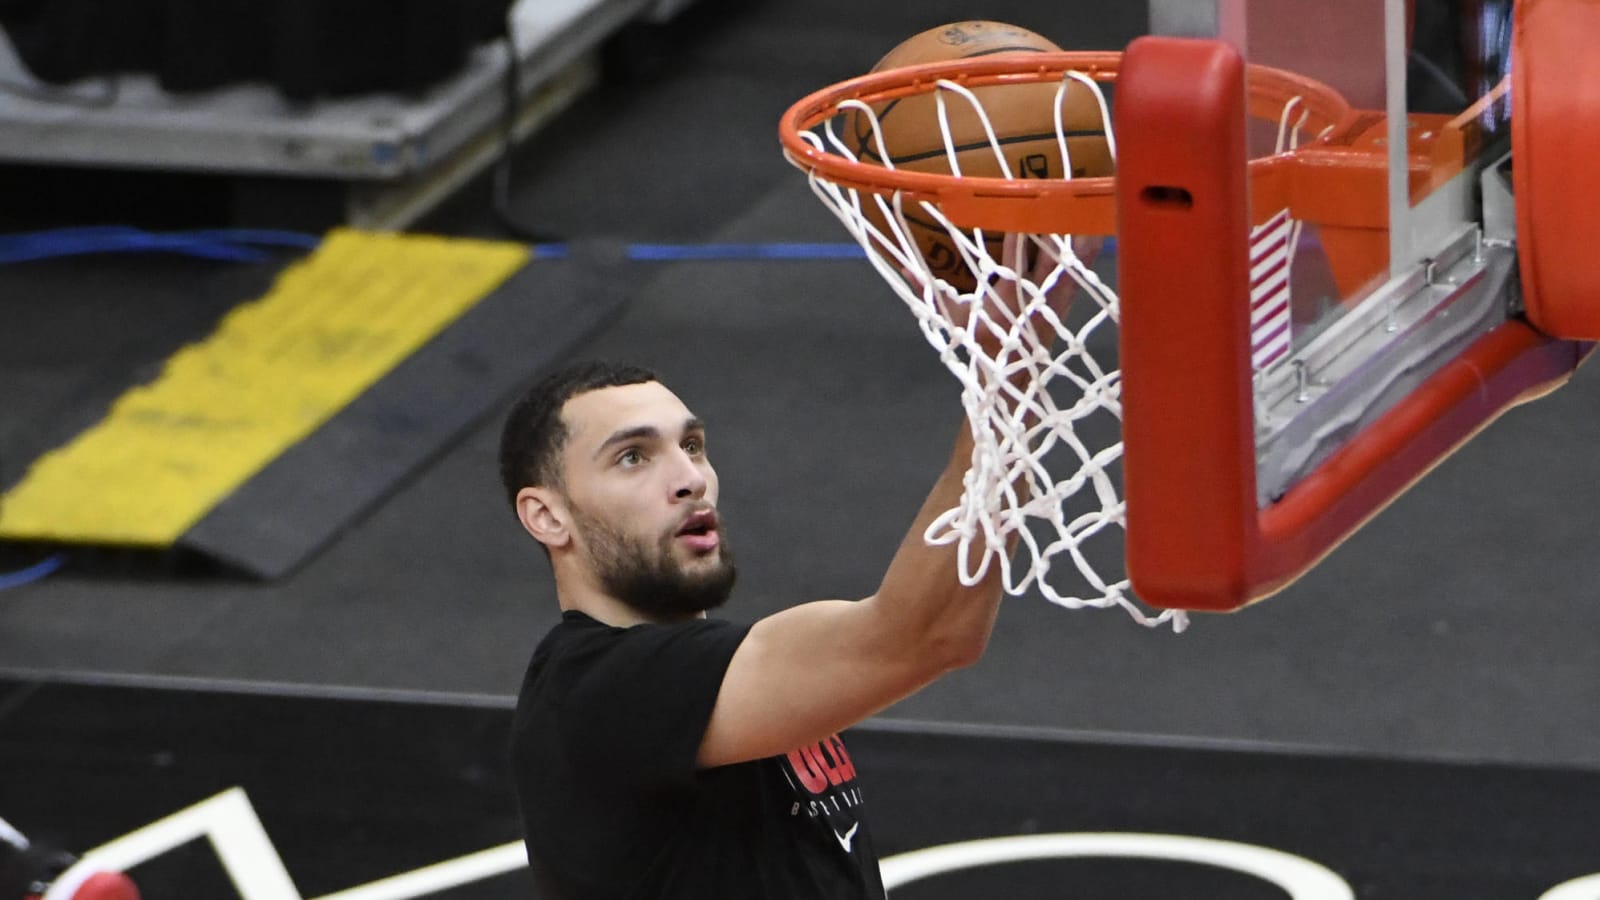 Watch: Zach LaVine has jaw-dropping pregame dunk